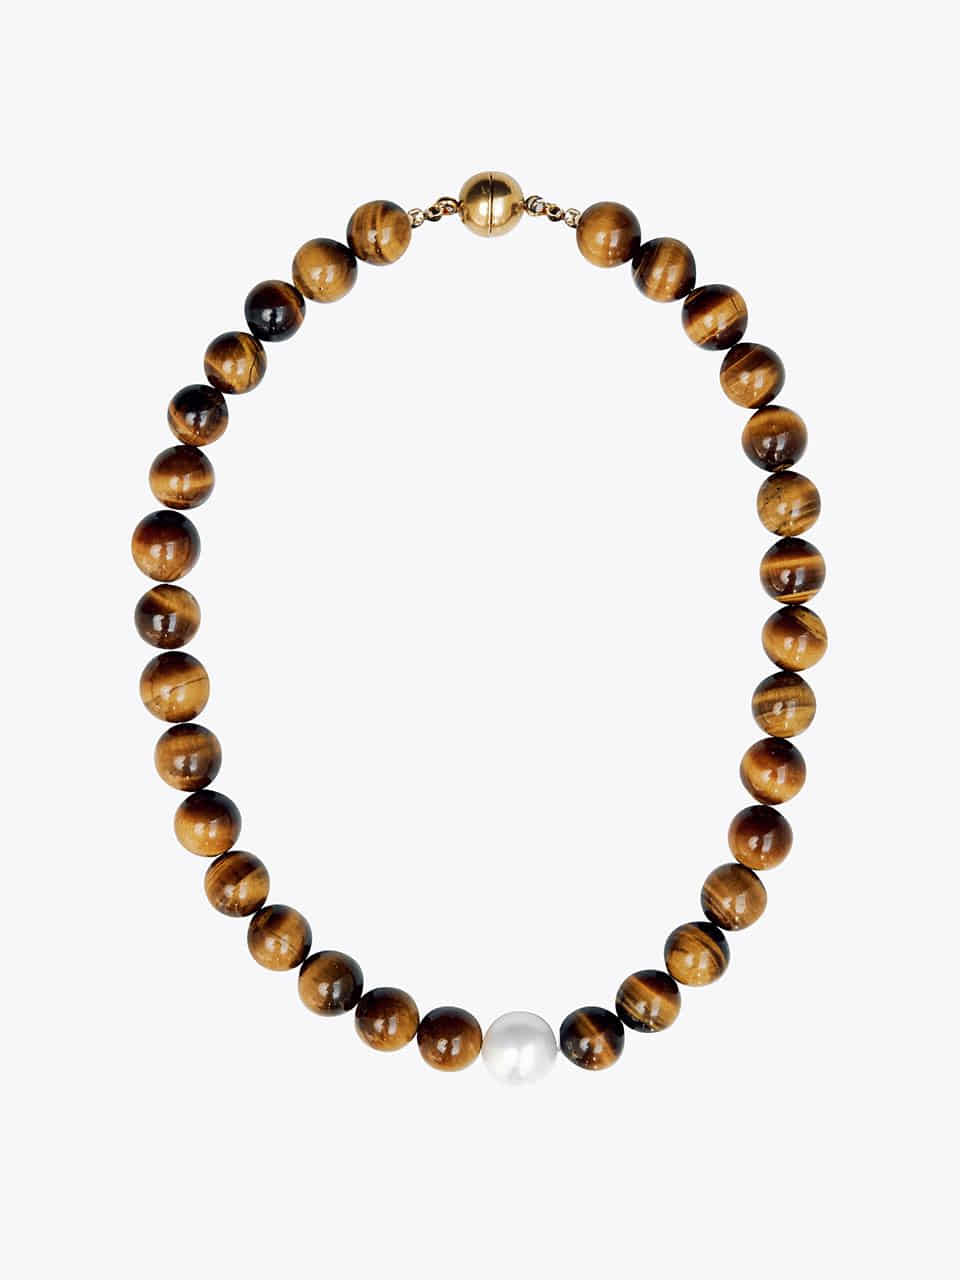 Jupiter stone necklace